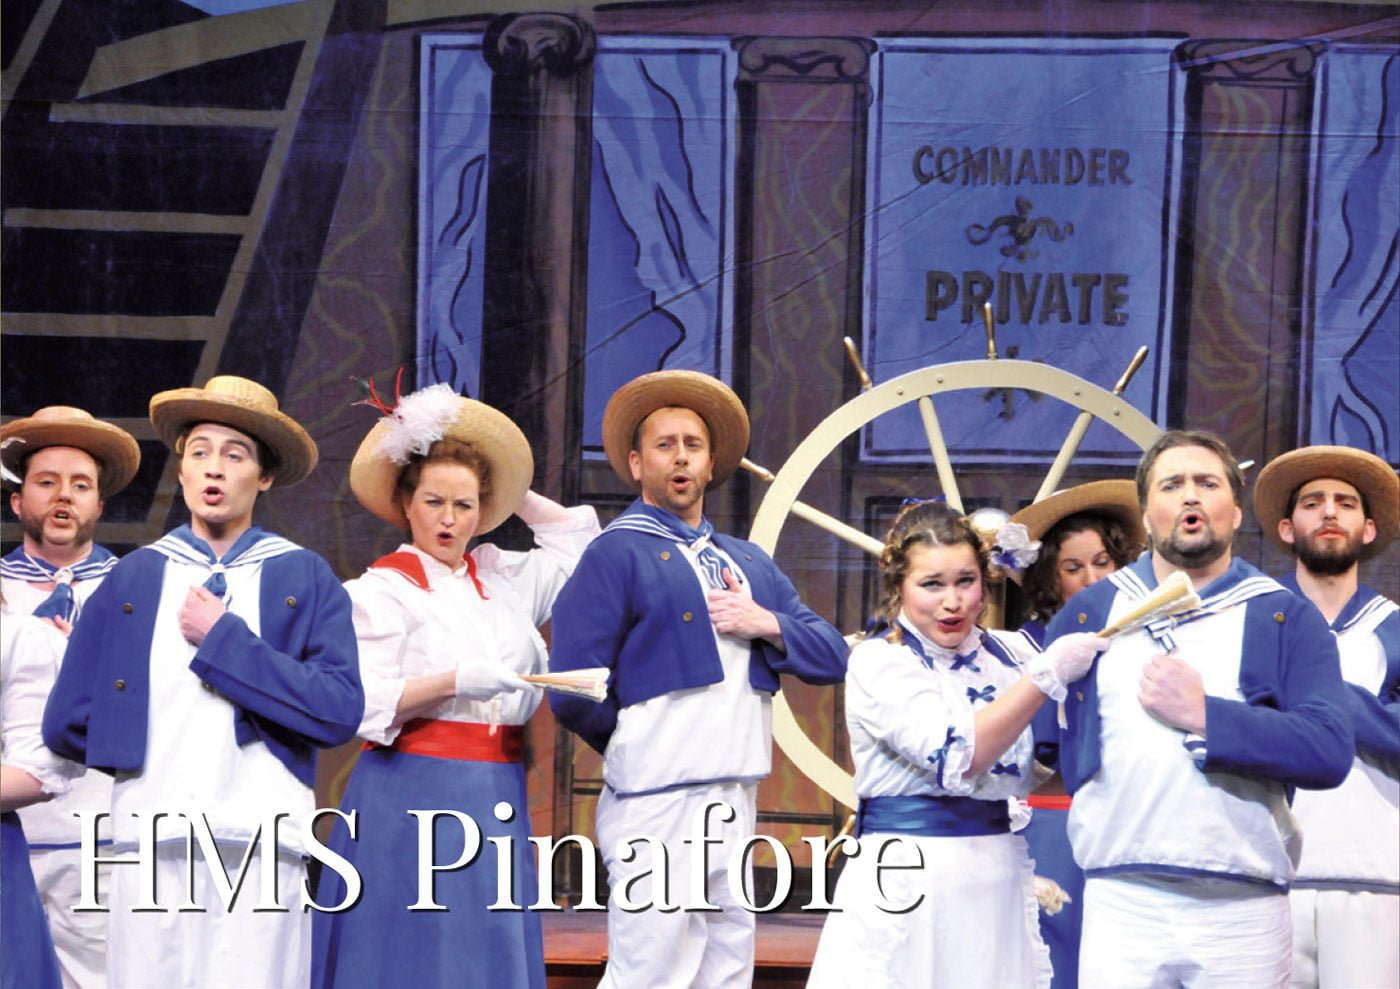 HMS Pinafore - Season 2019 ~ Gilbert & Sullivan Opera Victoria